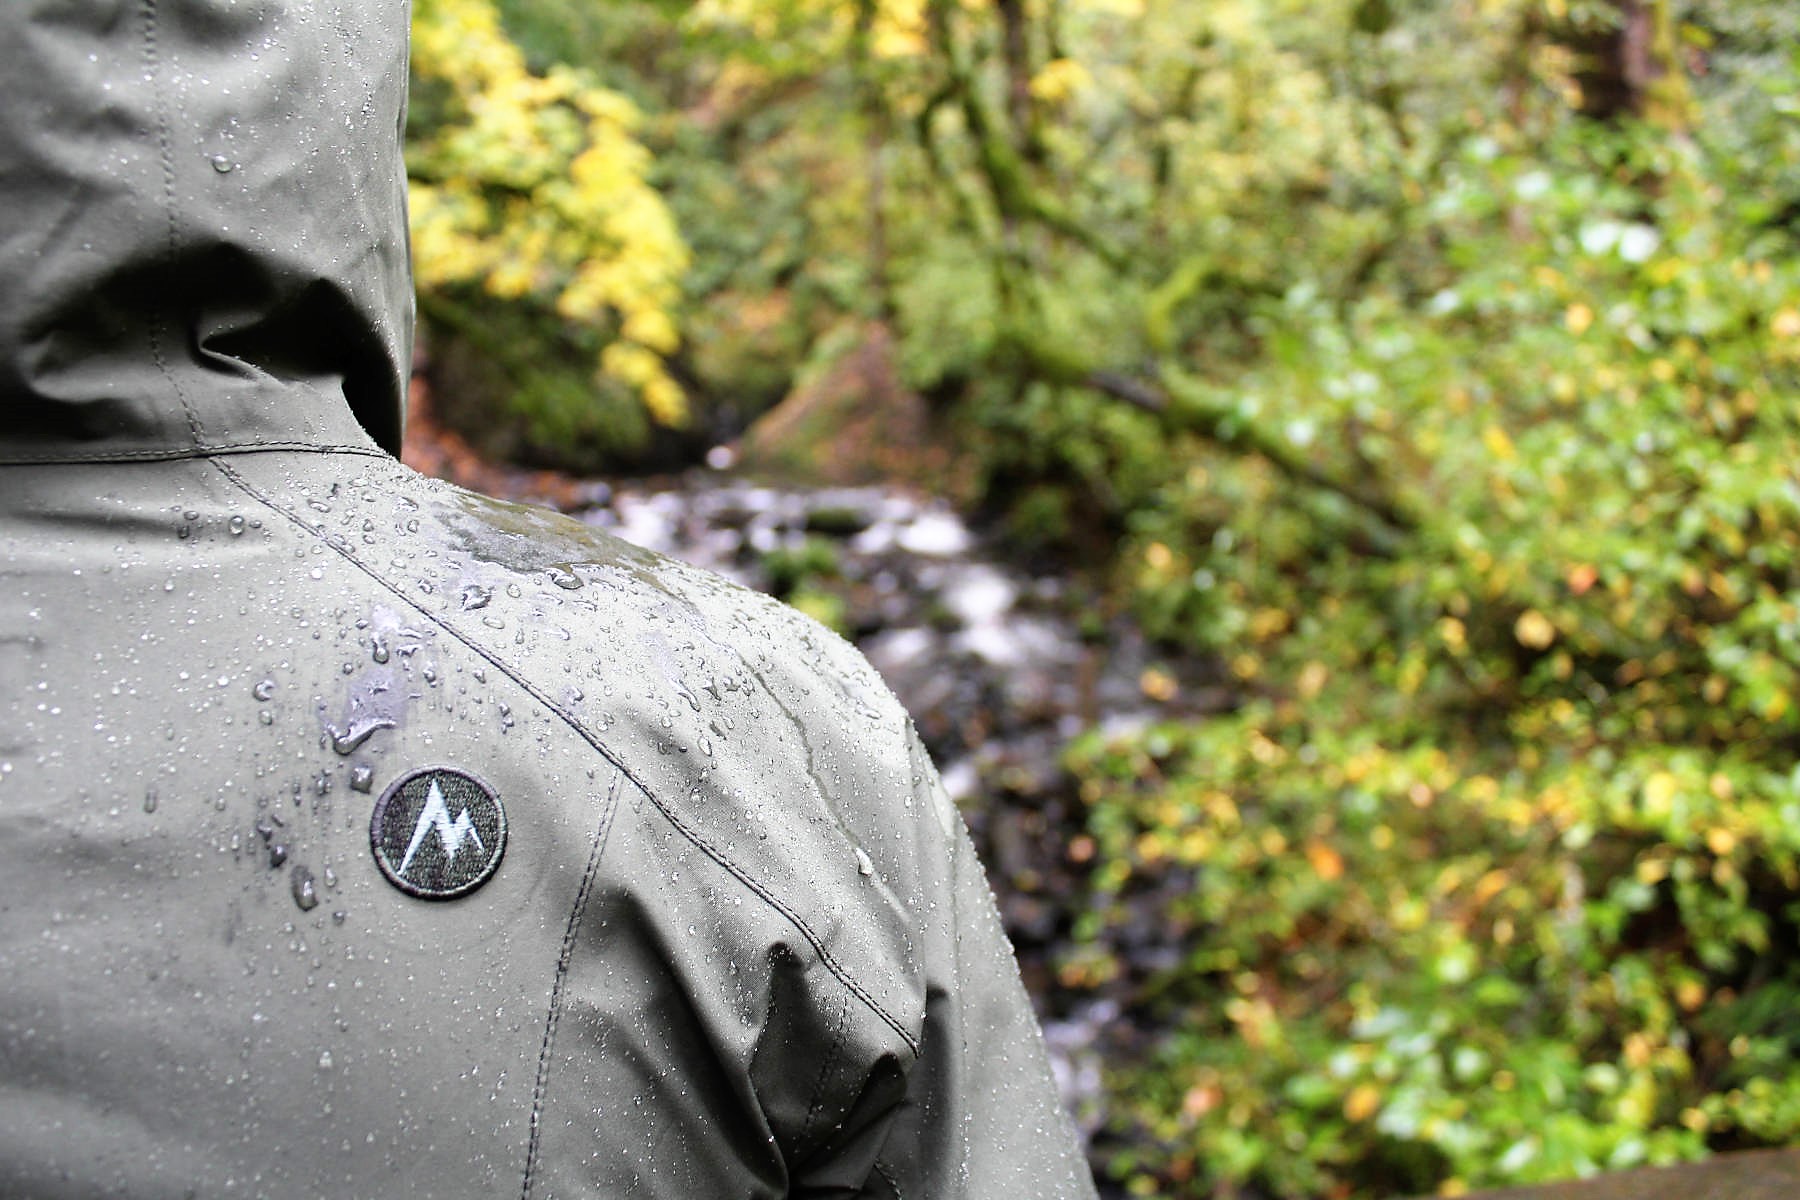 Ashley wearing her rain jacket hiking in Oregon's Columbia River Gorge - HelloTrail